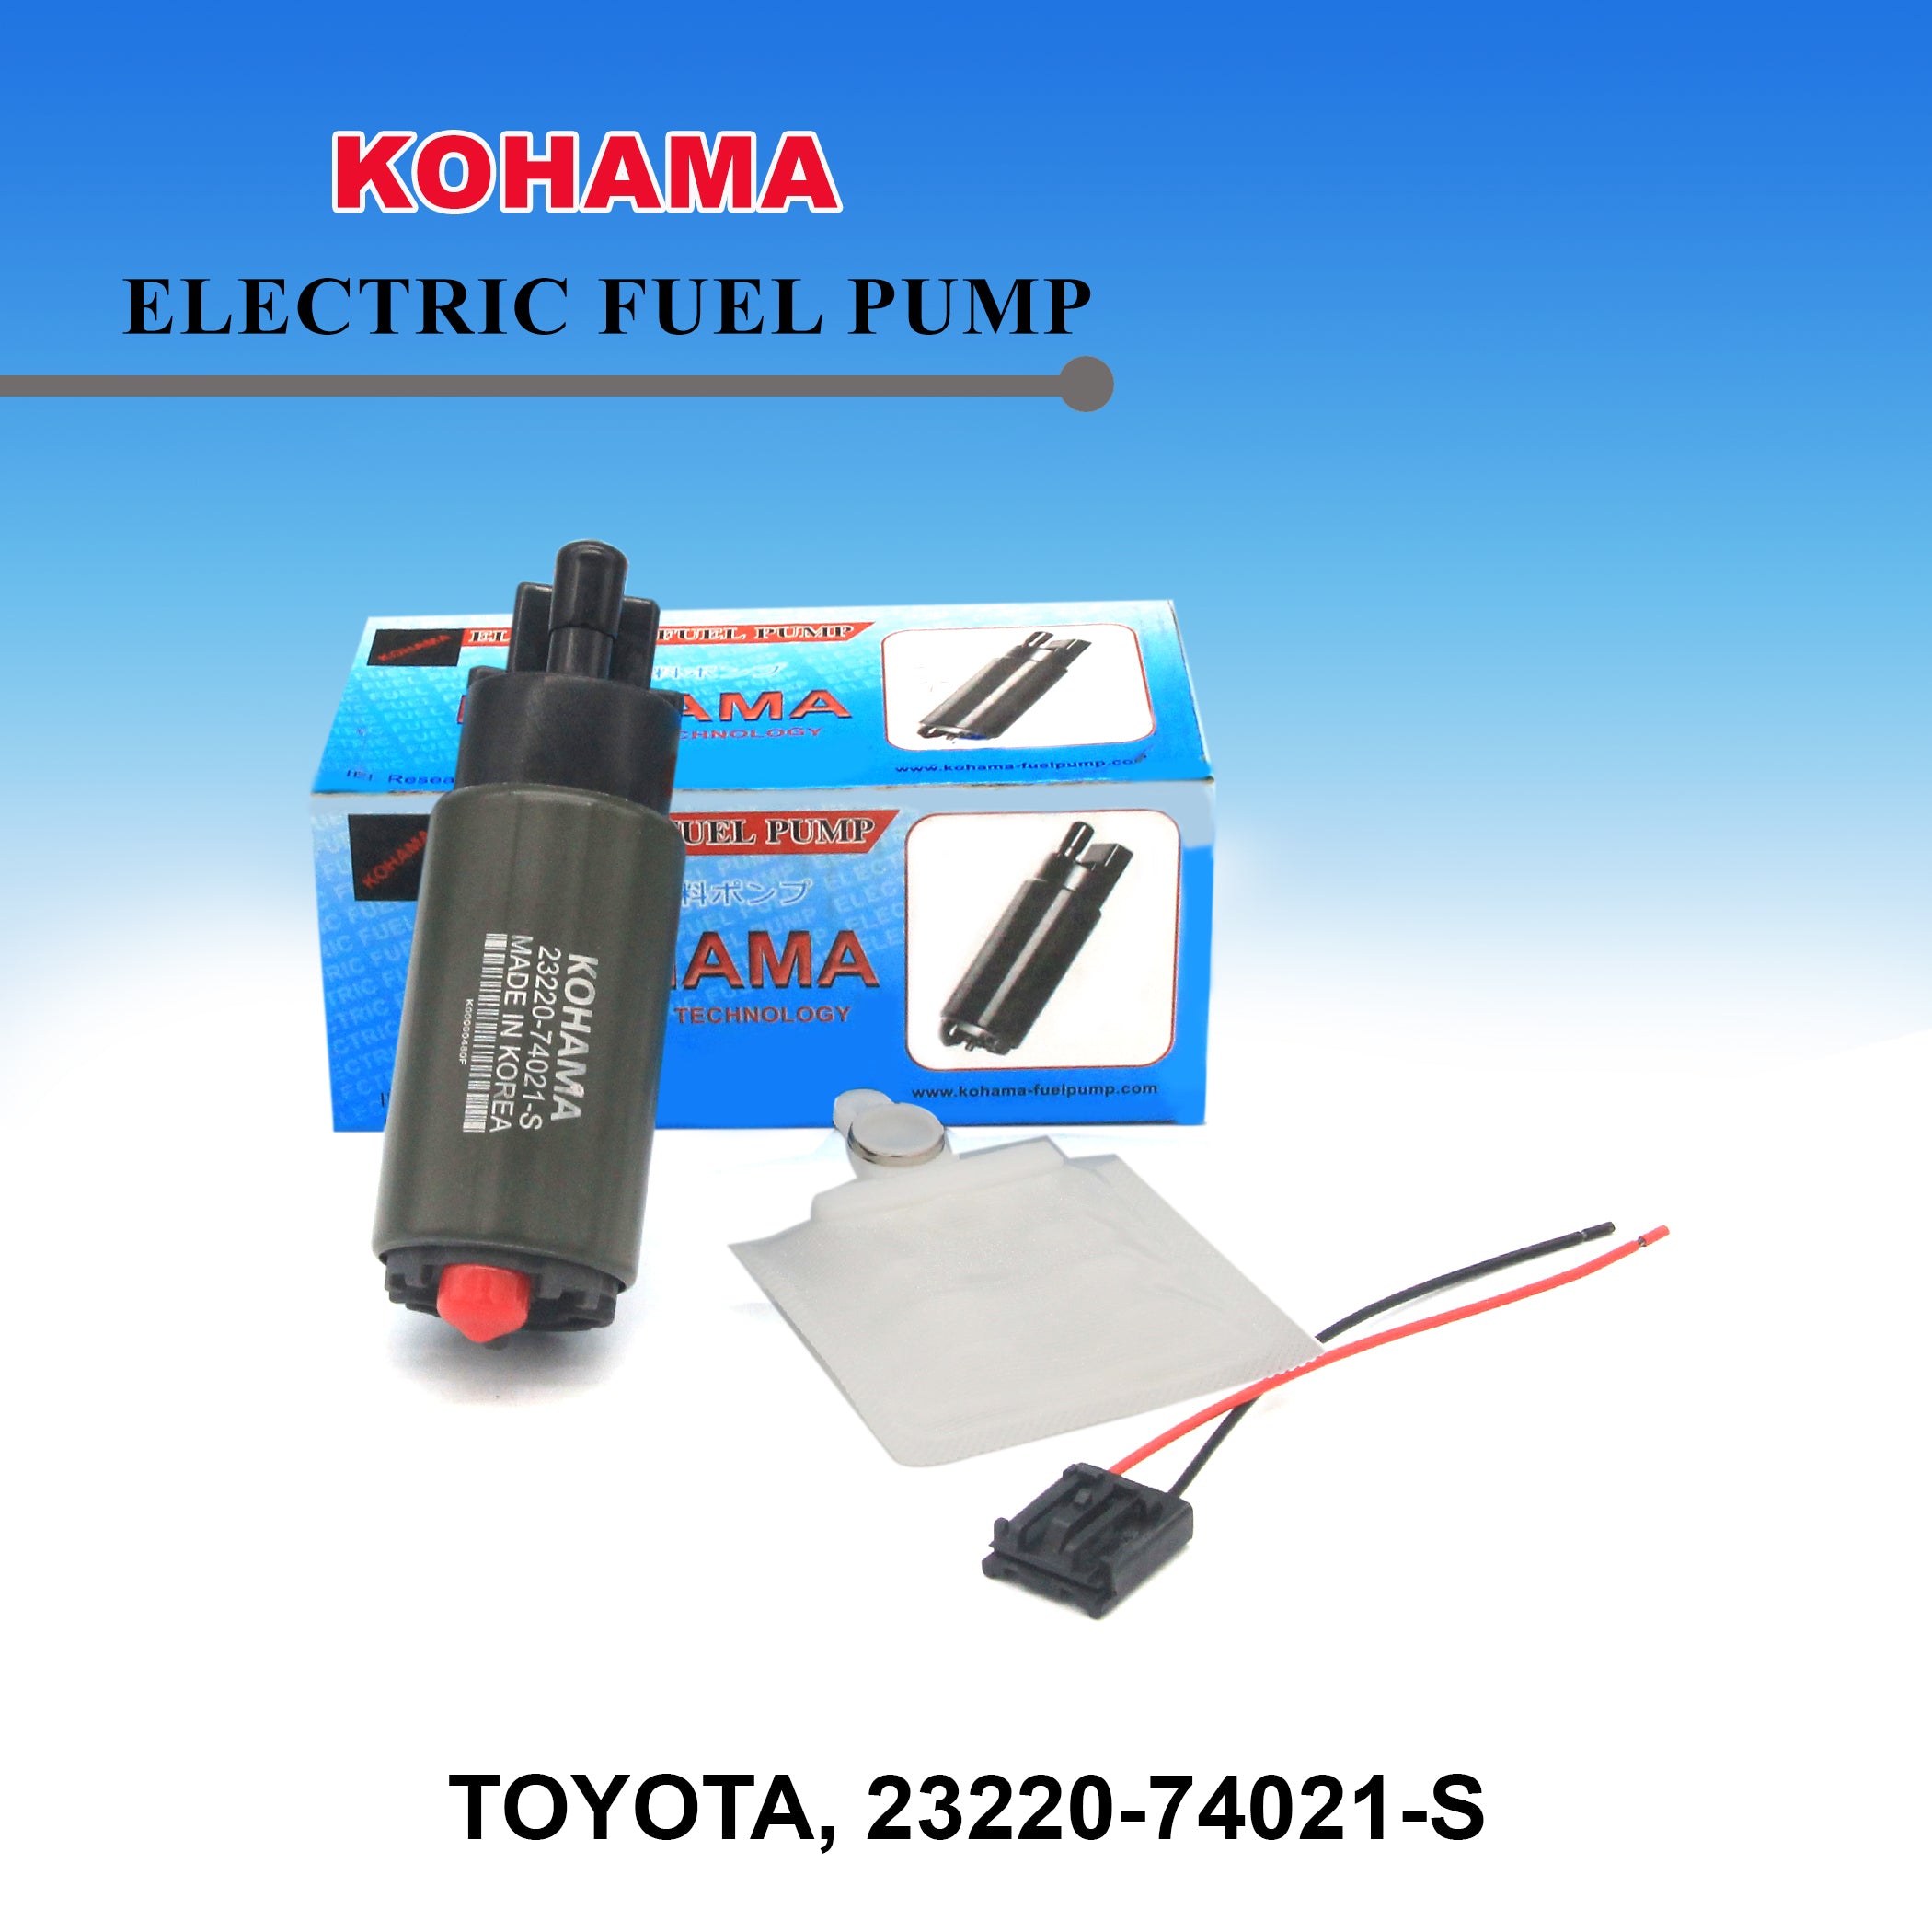 In-Tank Fuel Pump, KOHAMA, Small, 23220-74021-S (000878)